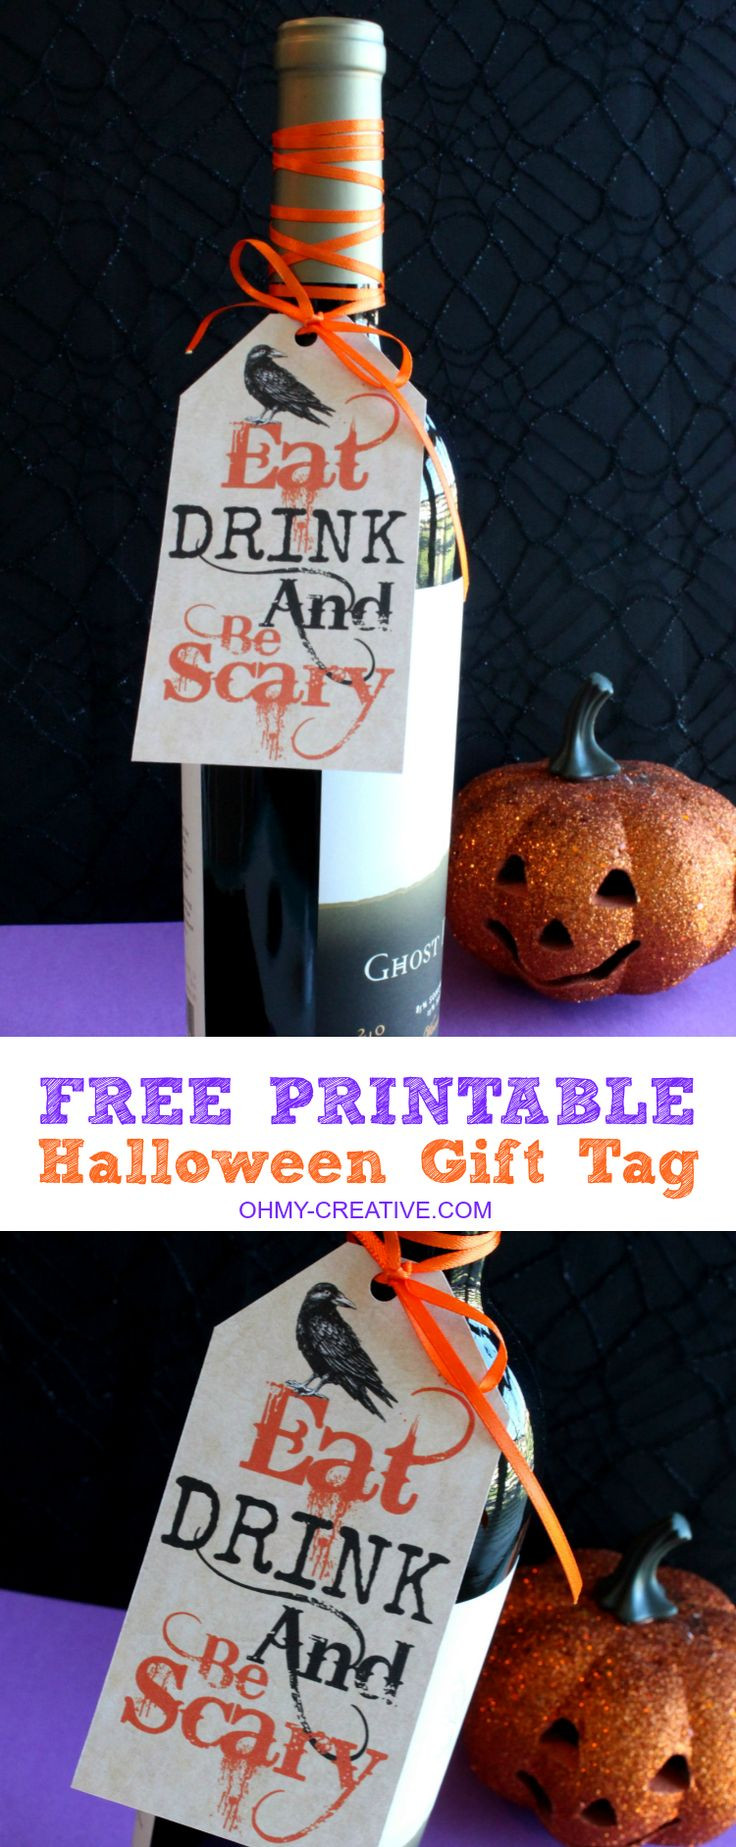 Halloween Party Hostess Gift Ideas
 20 best Clipart Fall & Halloween images on Pinterest